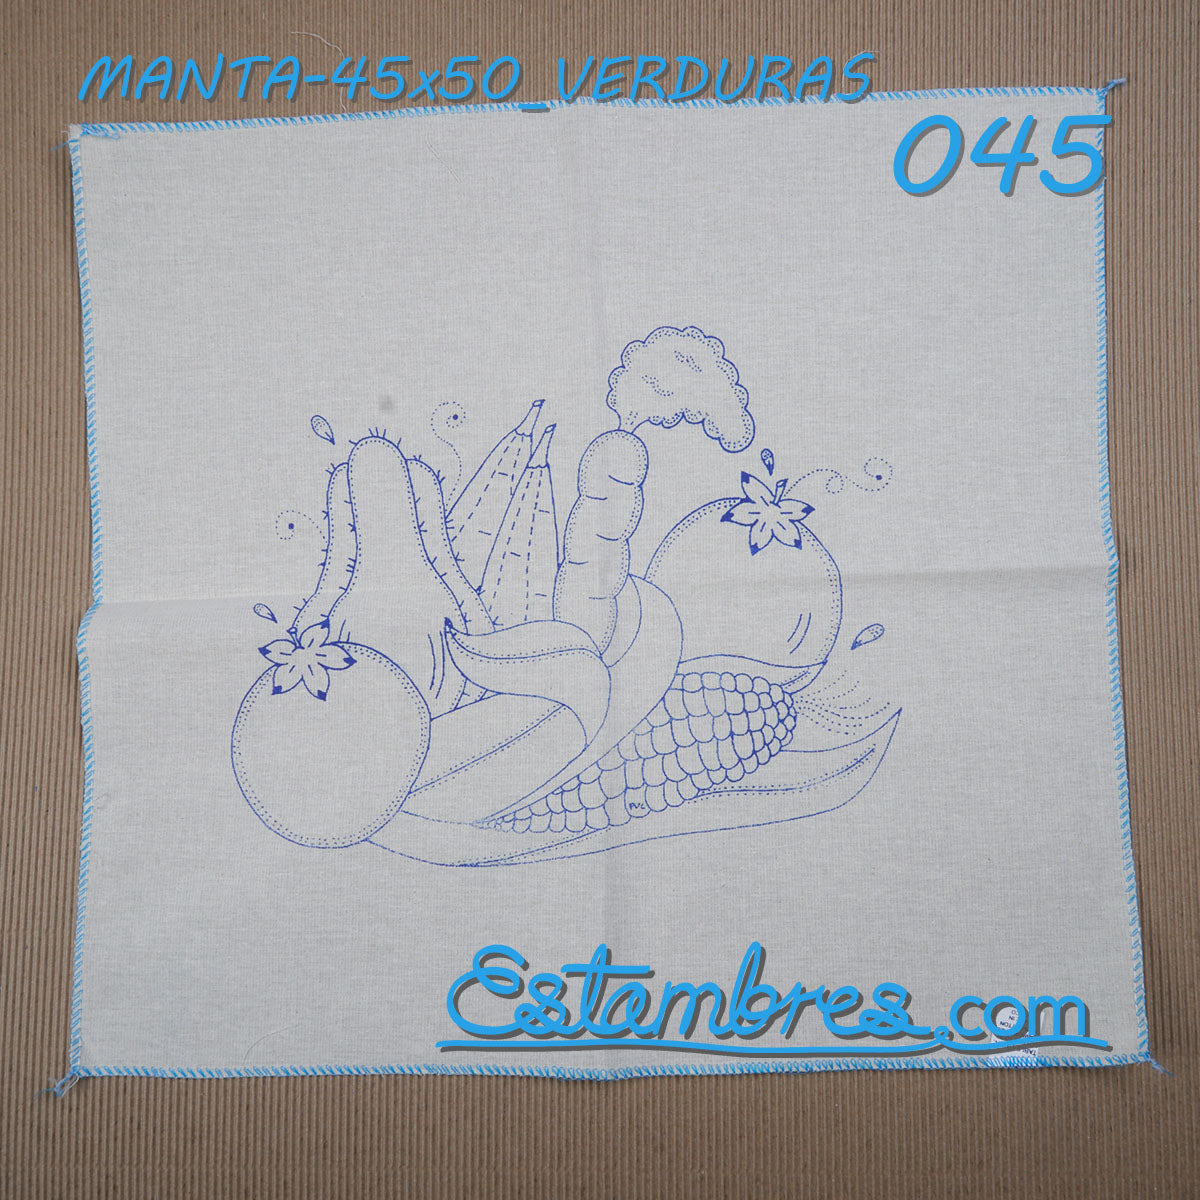 VERDURAS - Manta [45x50cm]